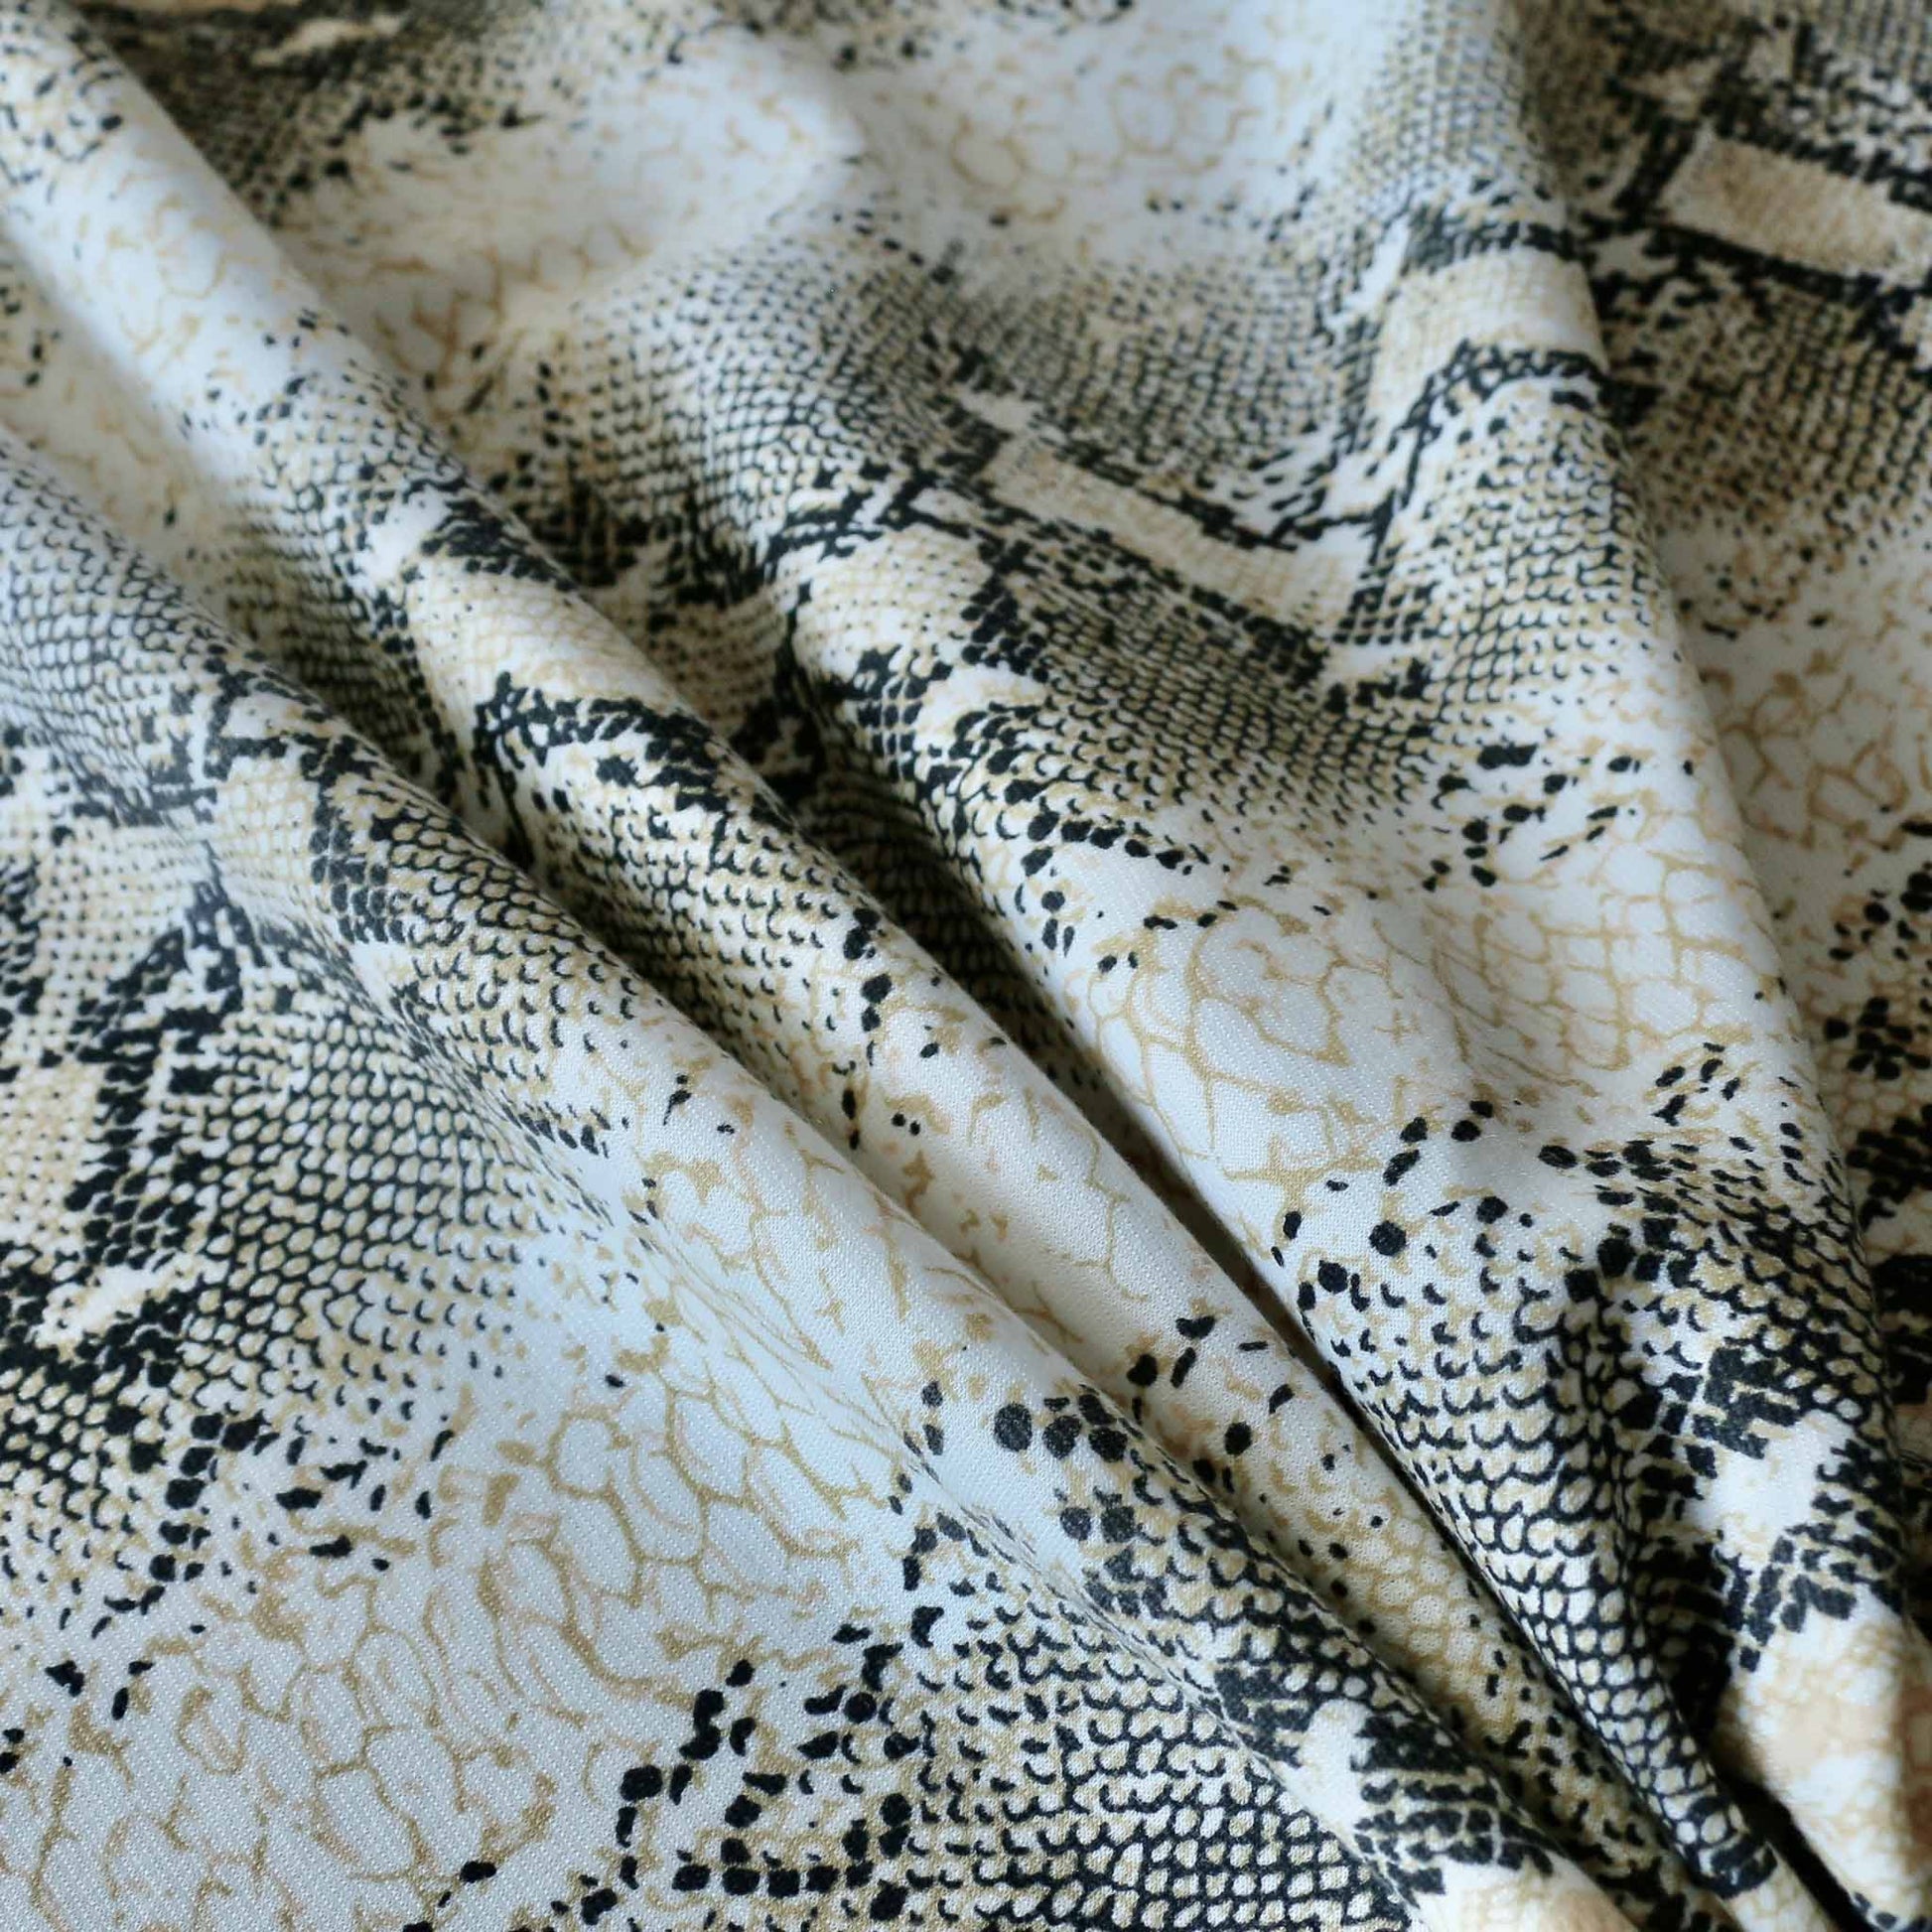 snake skin print in gold and black dressmaking ponte roma fabric